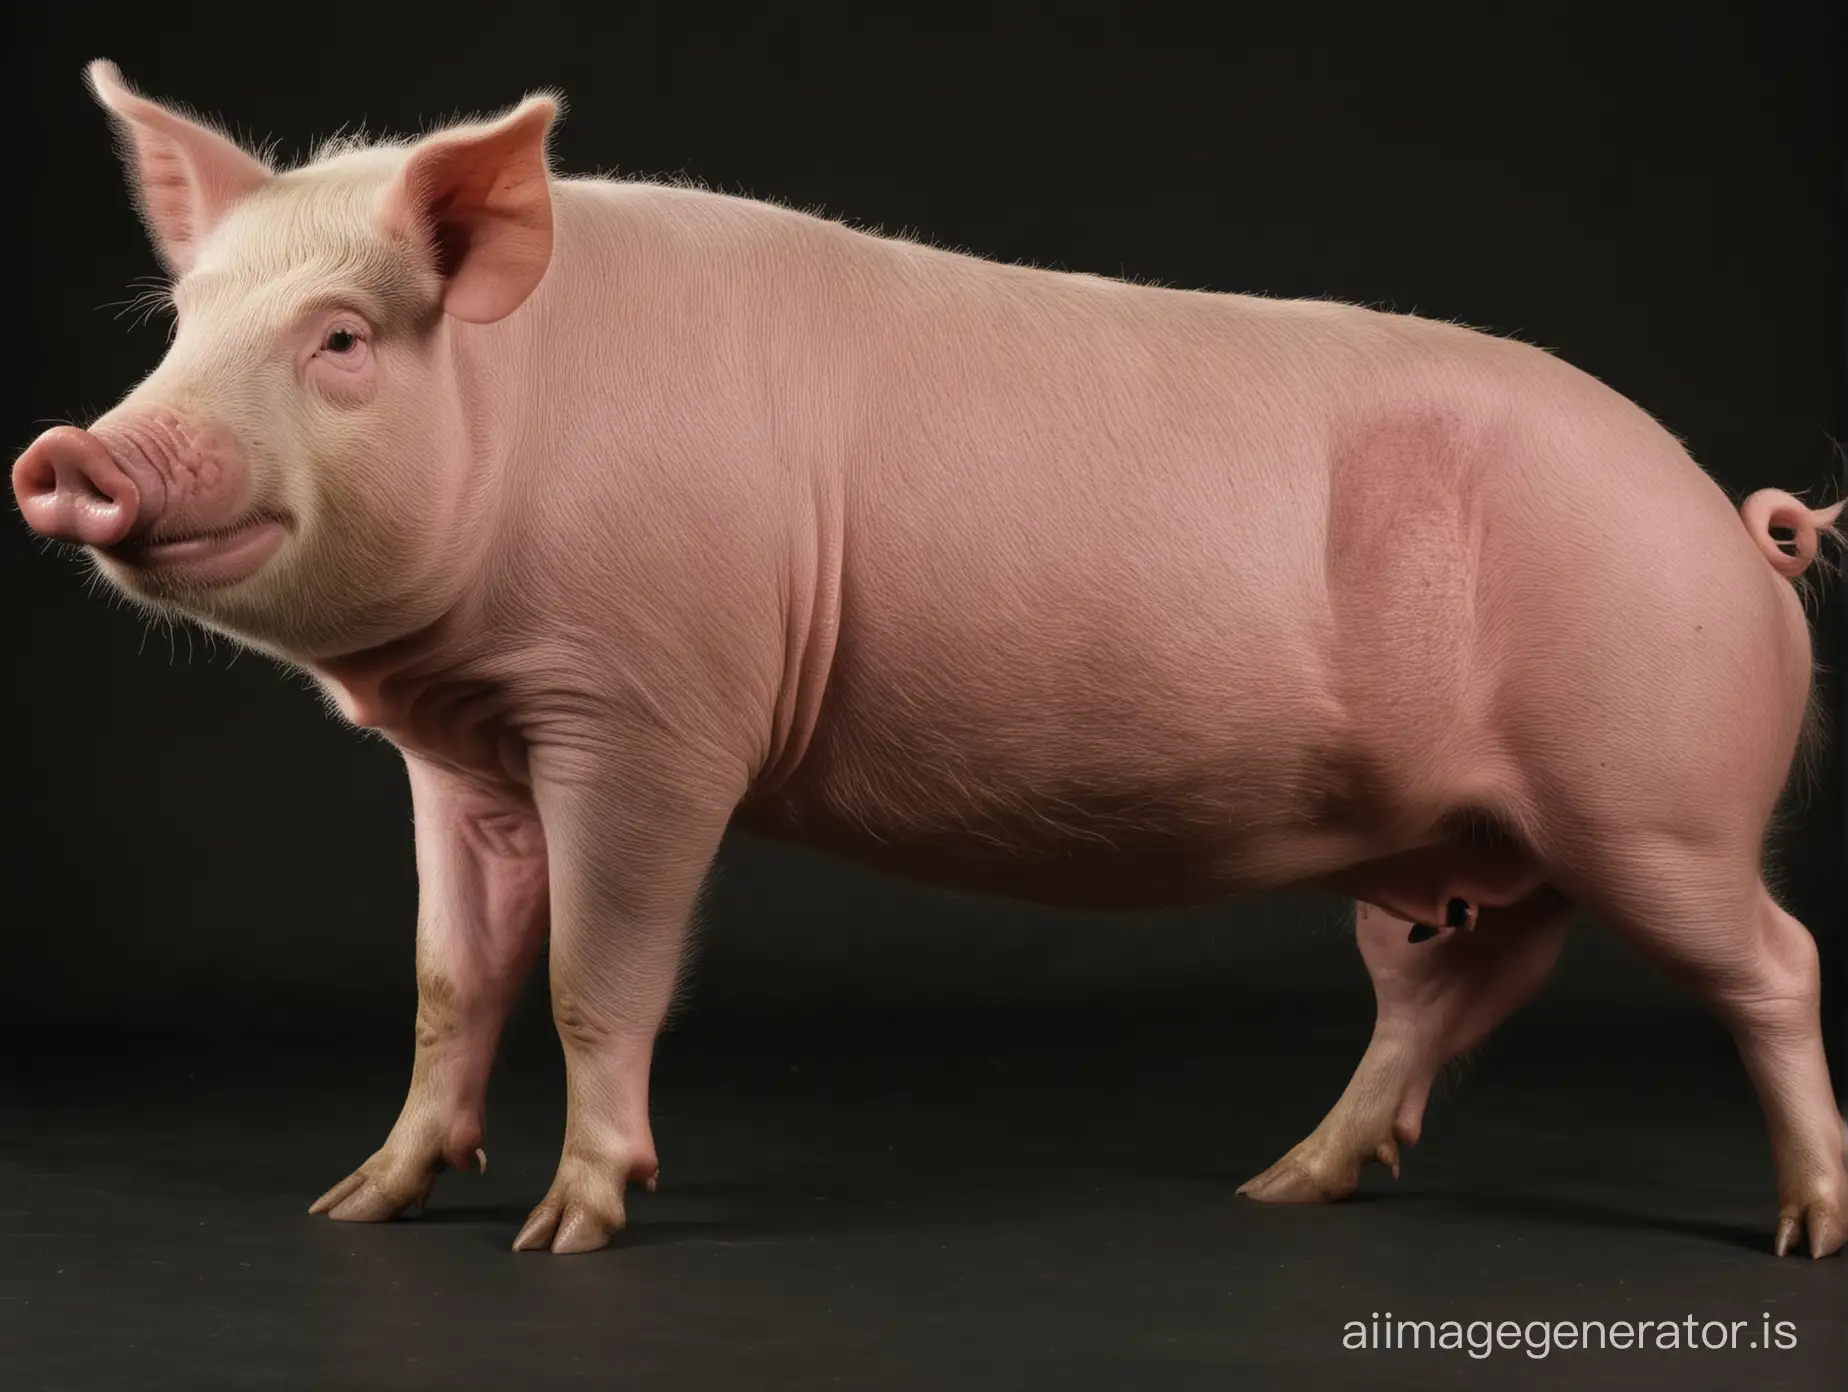 Gigantic-Farm-Pig-Displaying-Dominant-Behavior-on-Black-Background